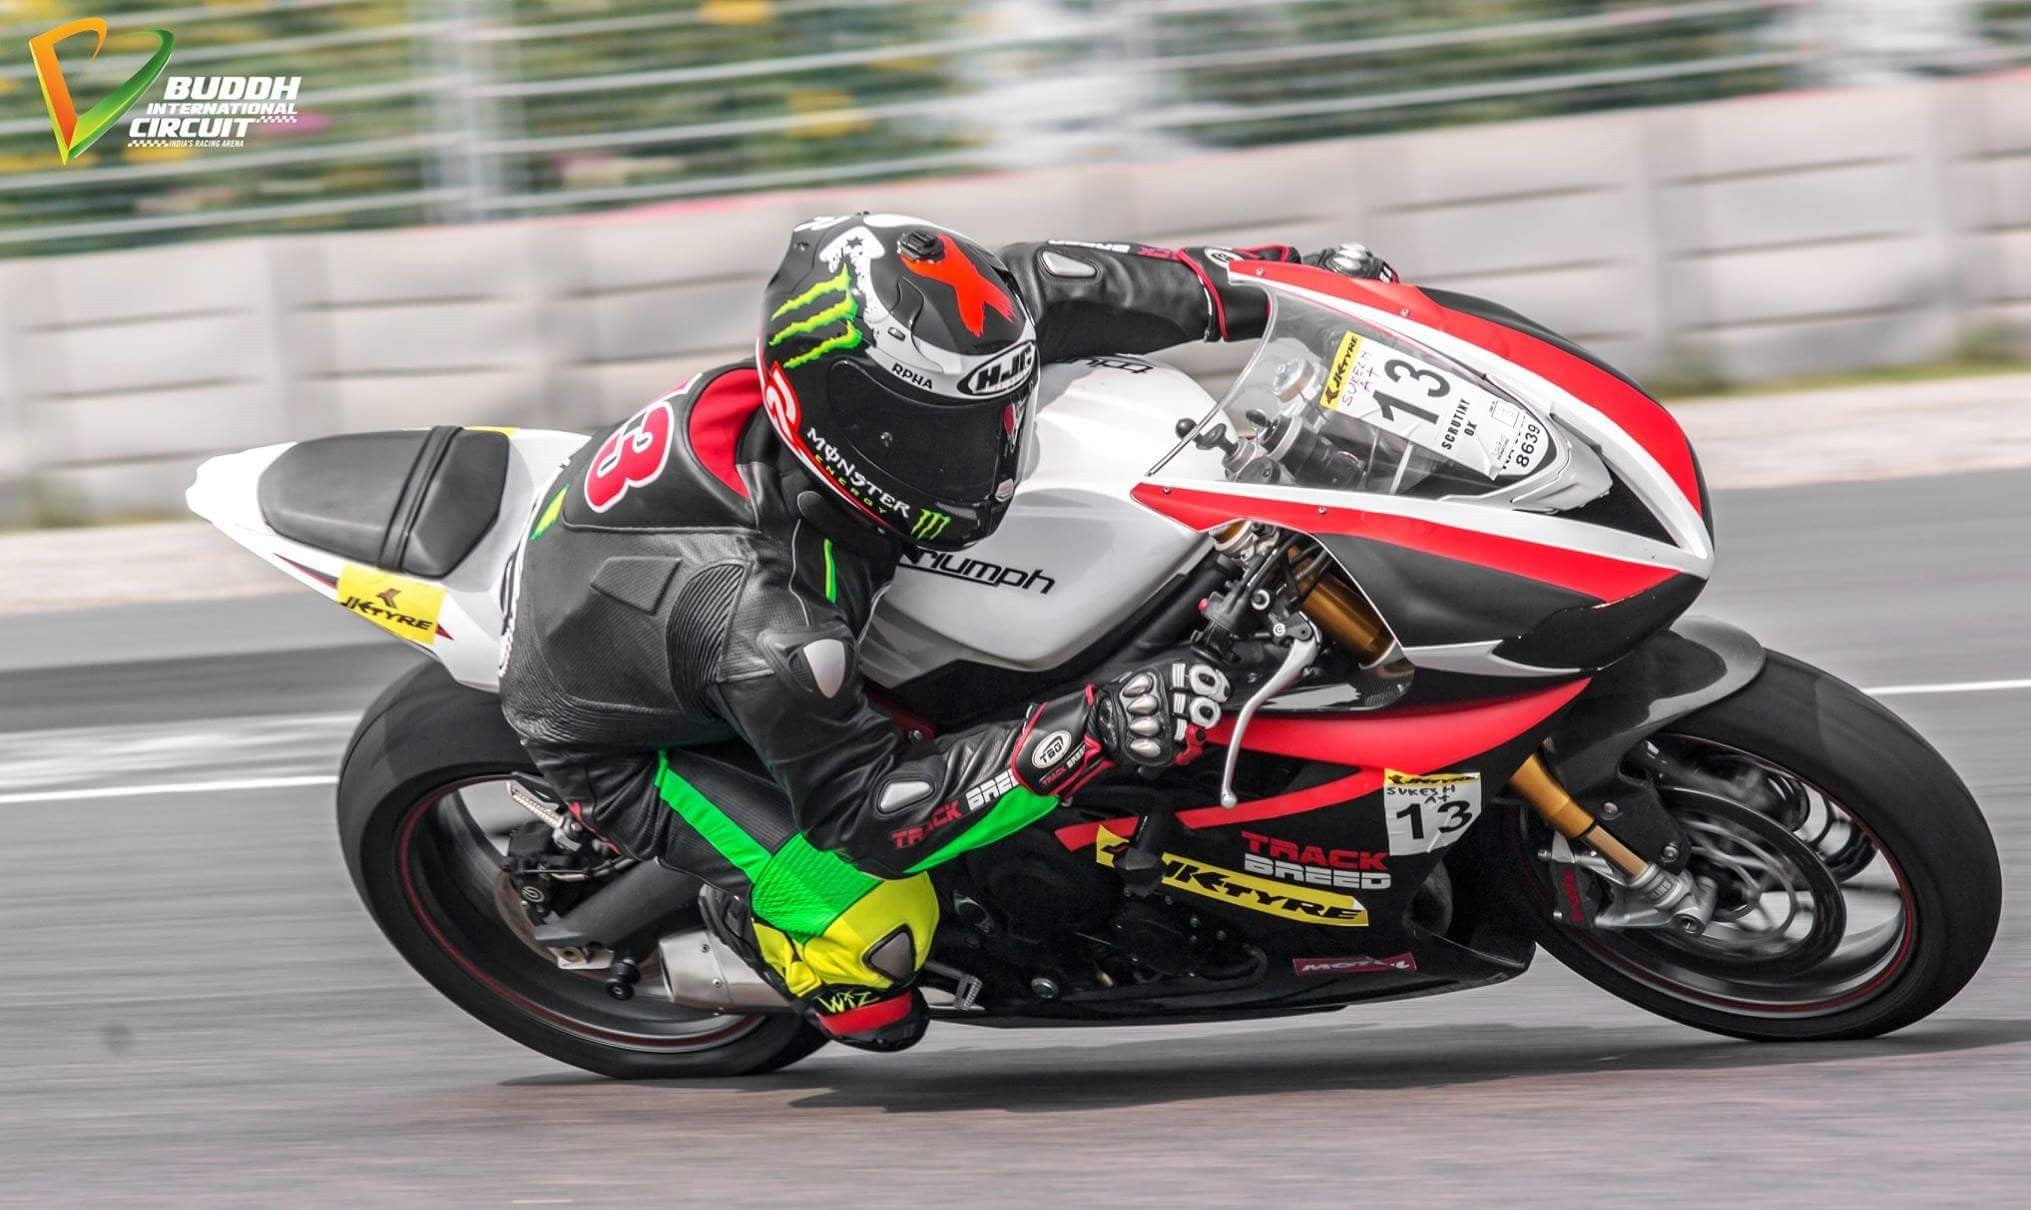 JK Tyre Superbike 600cc race on Triumph Daytona 675R at Buddh International Circuit, Delhi, India - 2015